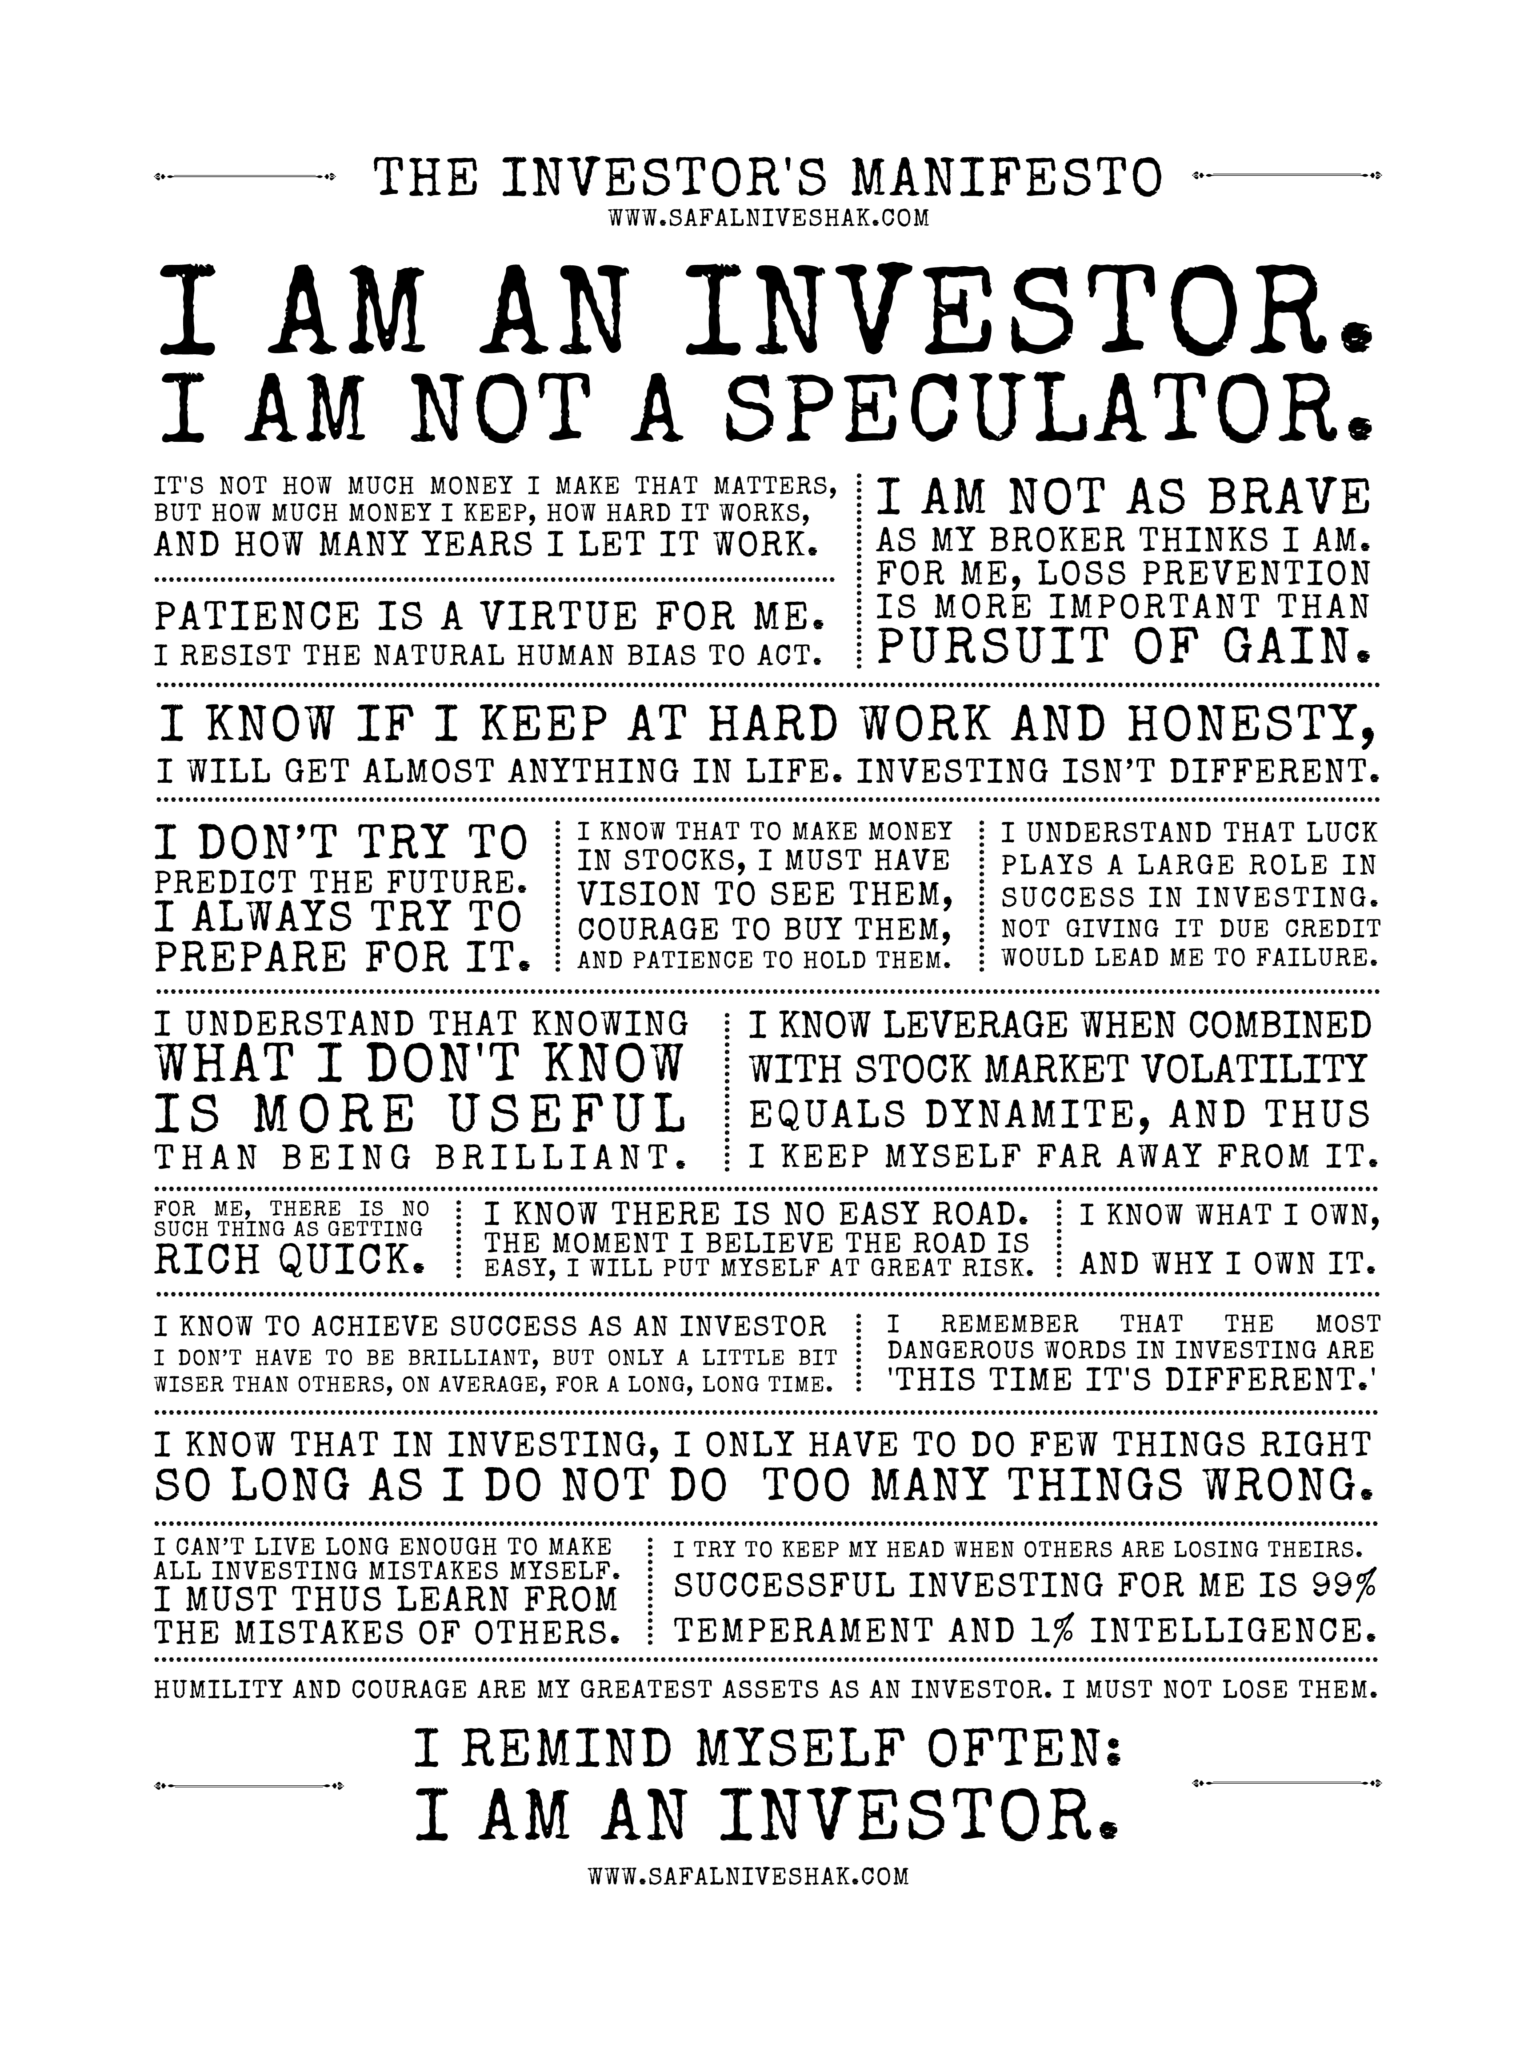 investor manifesto